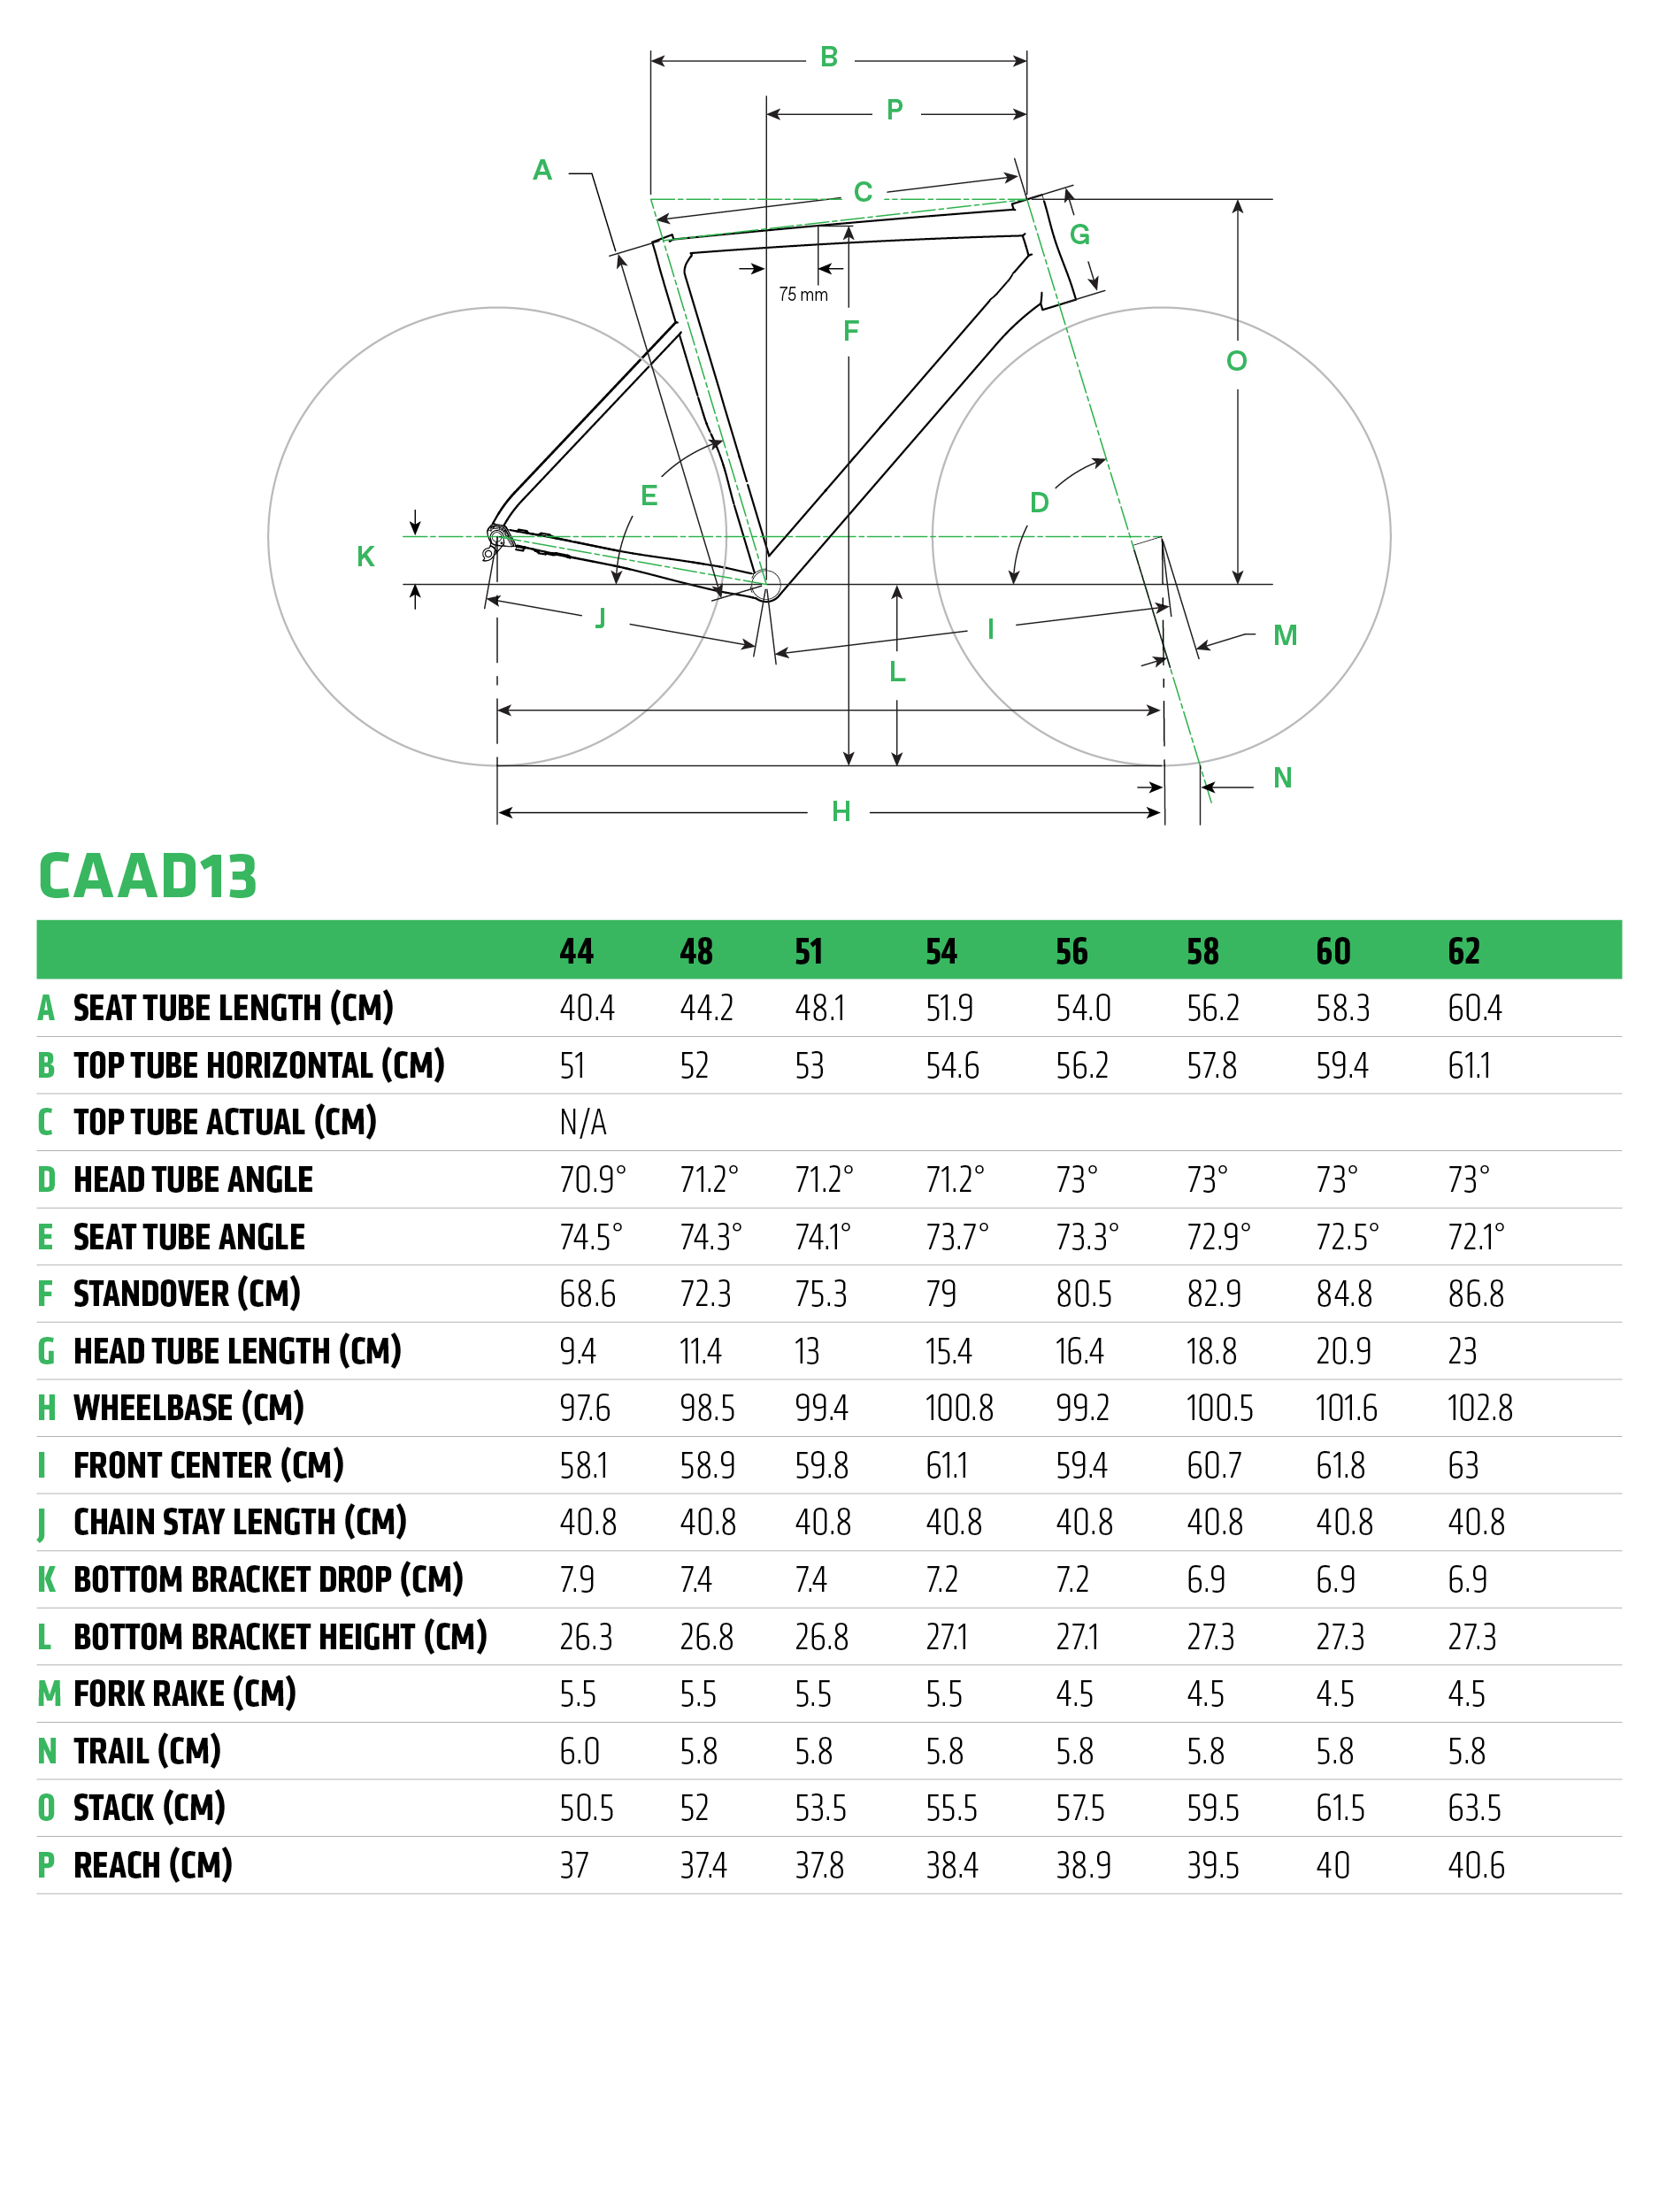 caad13 size chart